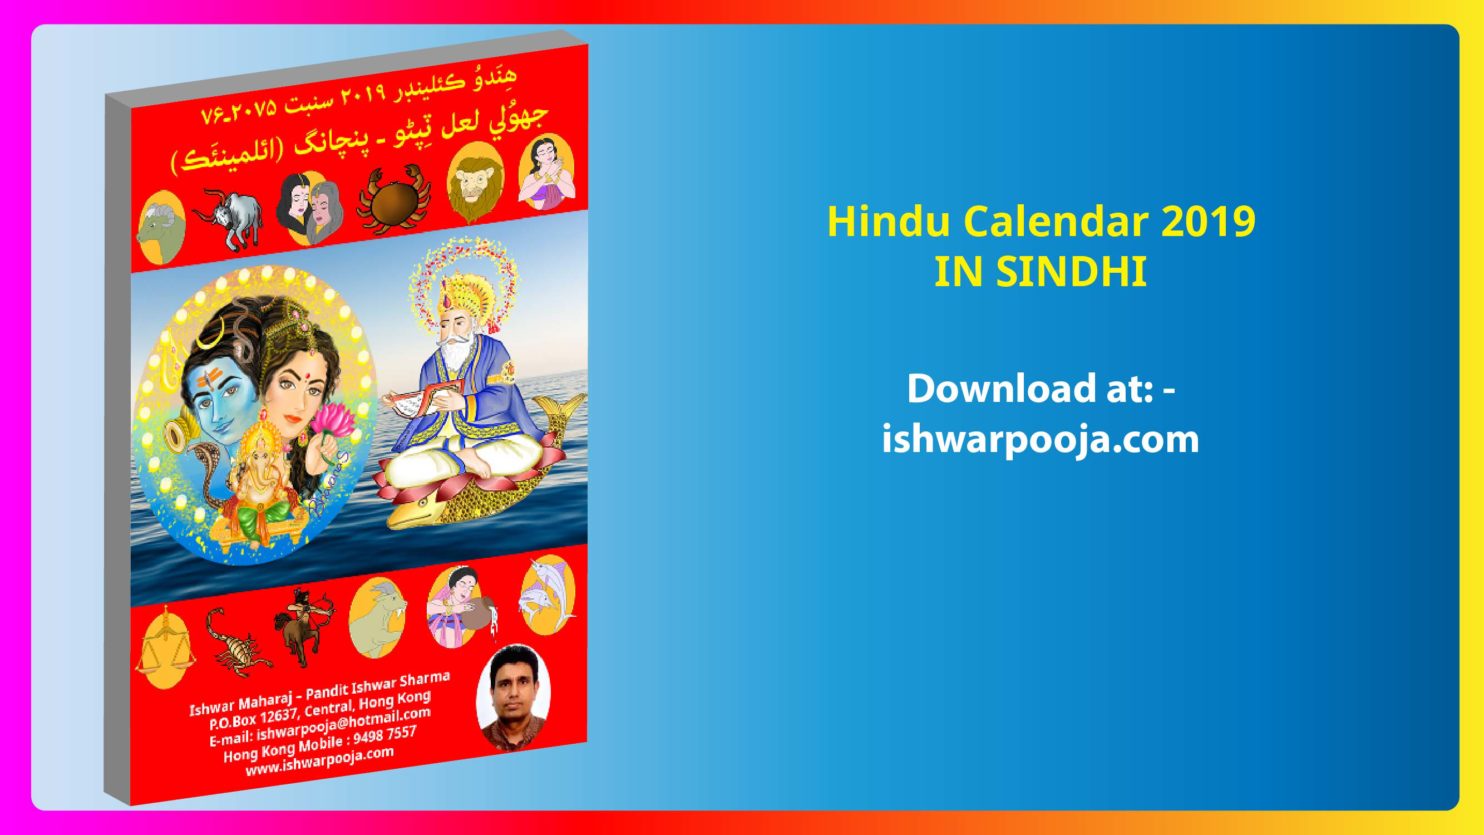 Jhulelal Tipno Hindu Calendar 2019 in Sindhi Cover